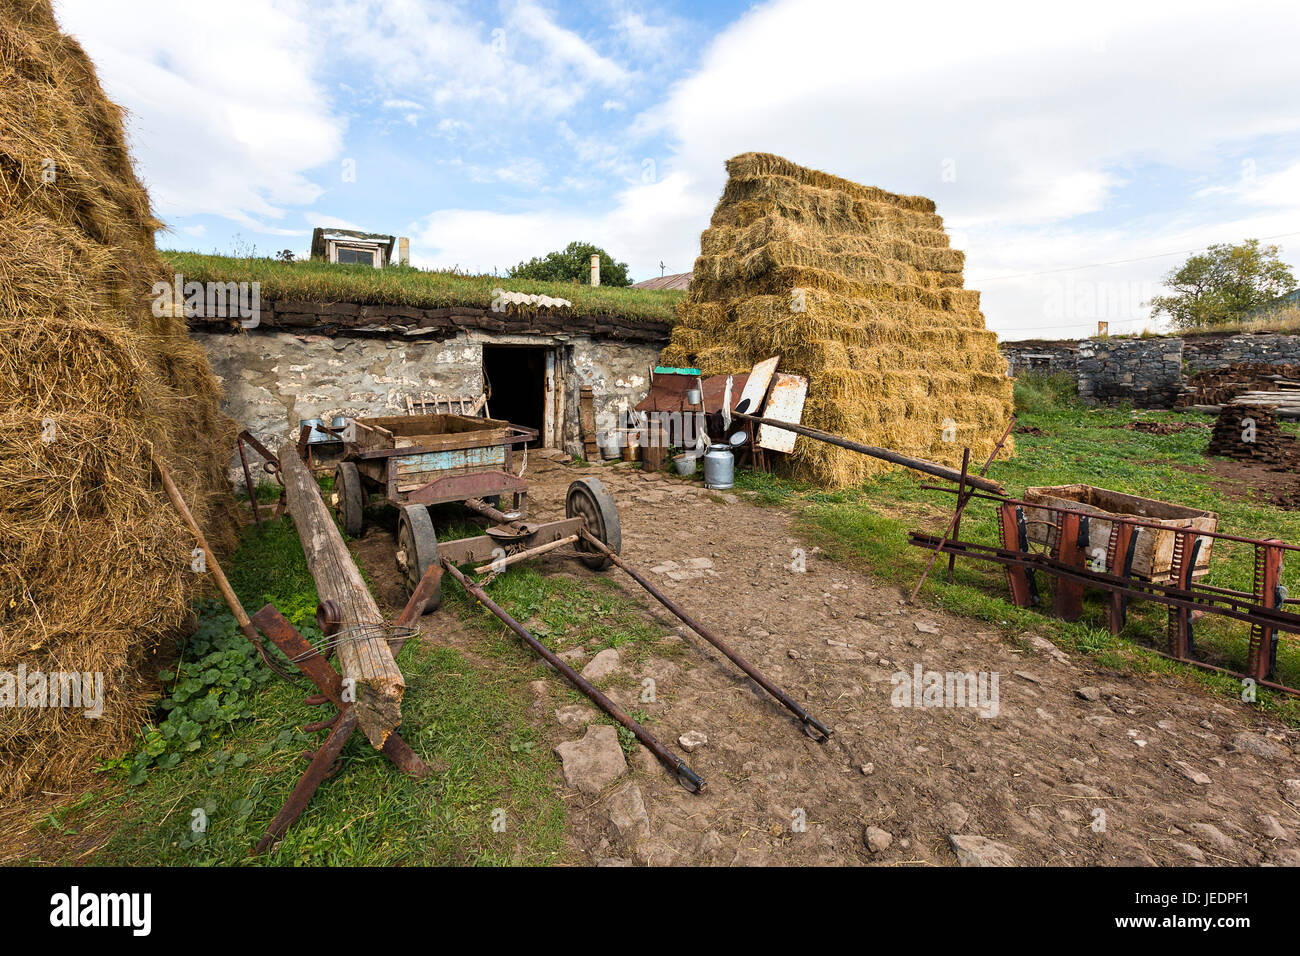 Haystack and agricultural scene in village Bokdajeni, Georgia, Caucasus. Stock Photo